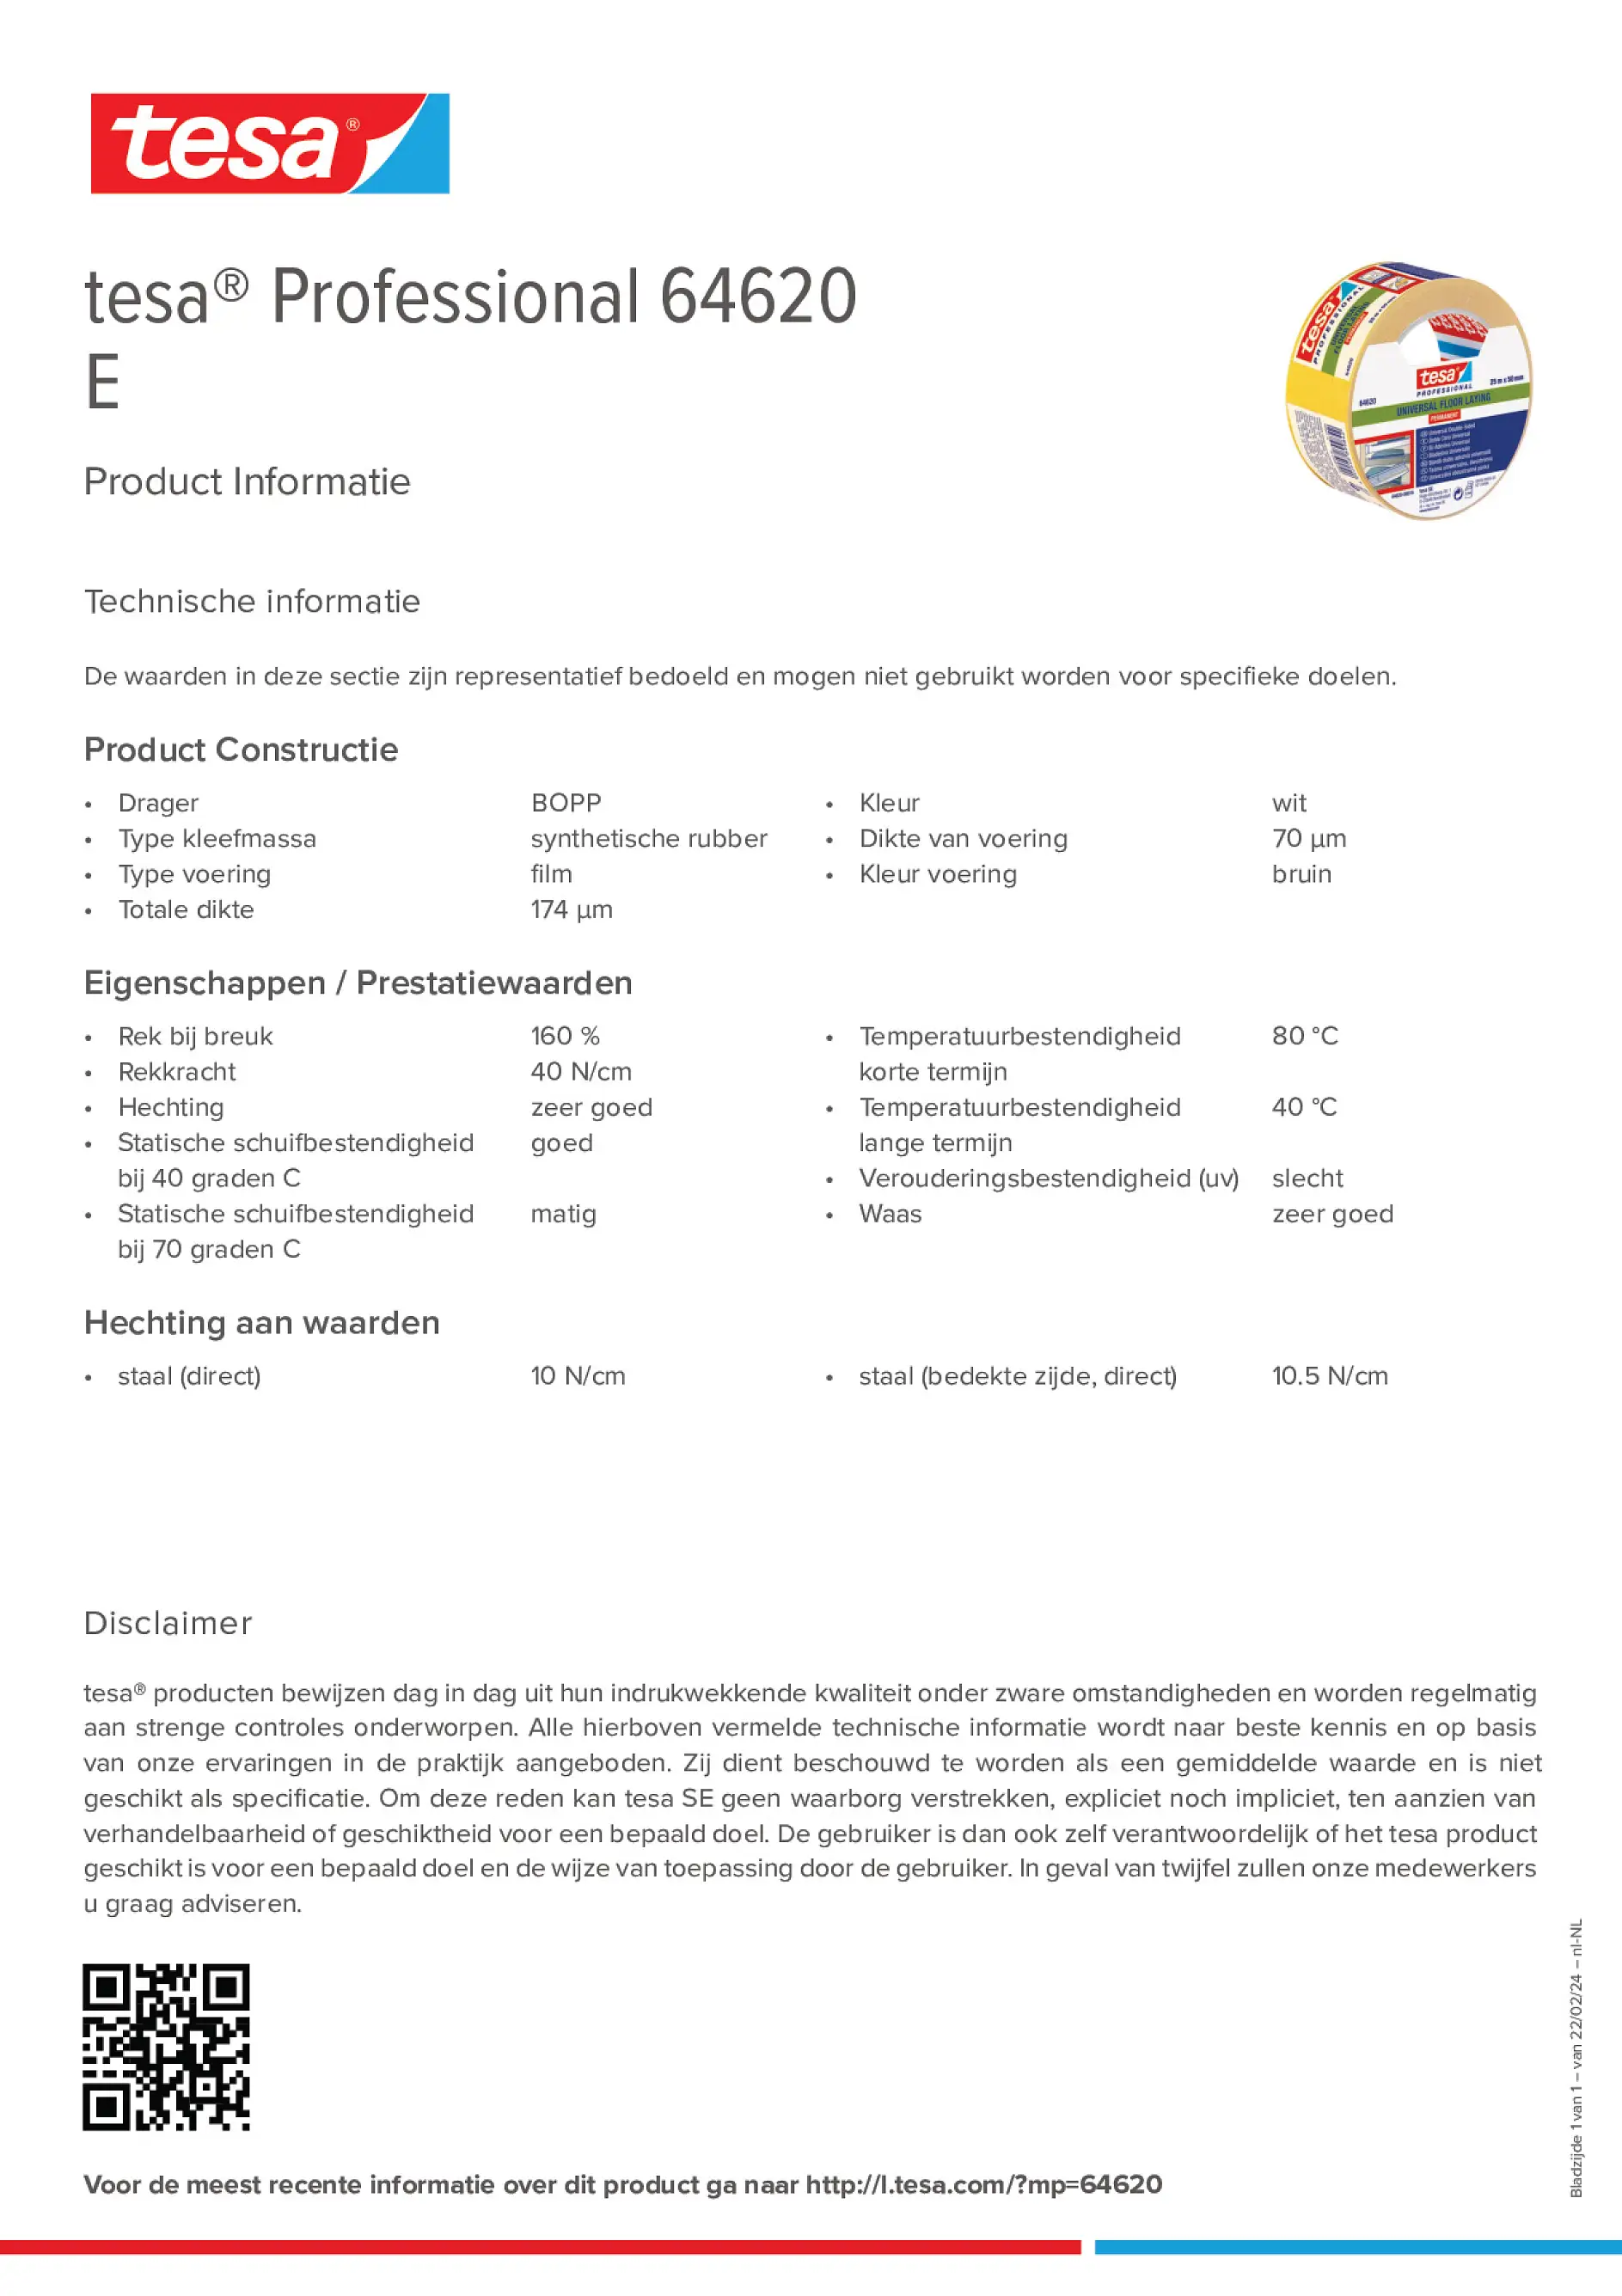 Product information_tesa® Professional 64620_nl-NL